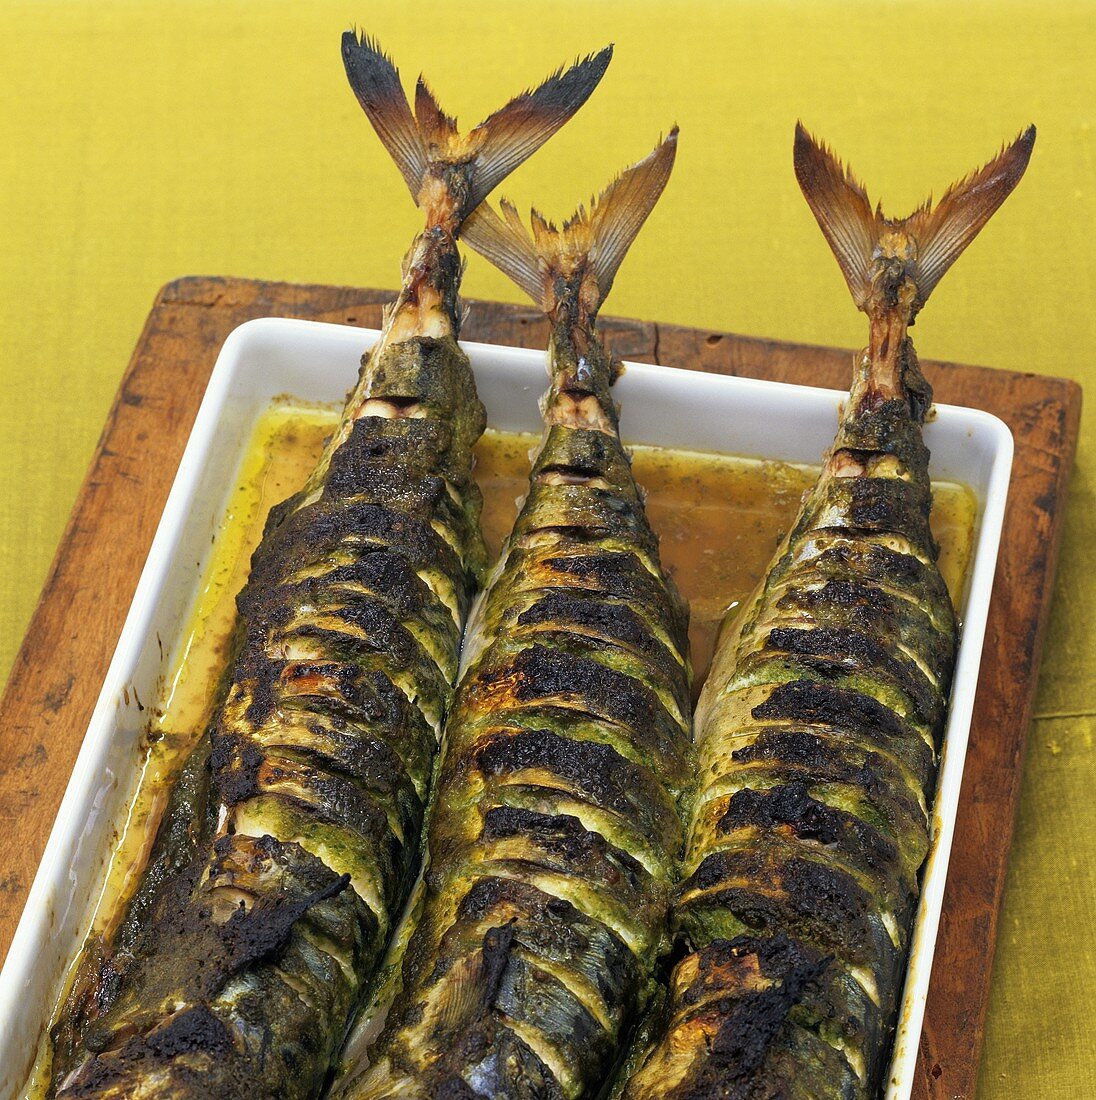 Grilled mackerel with coriander